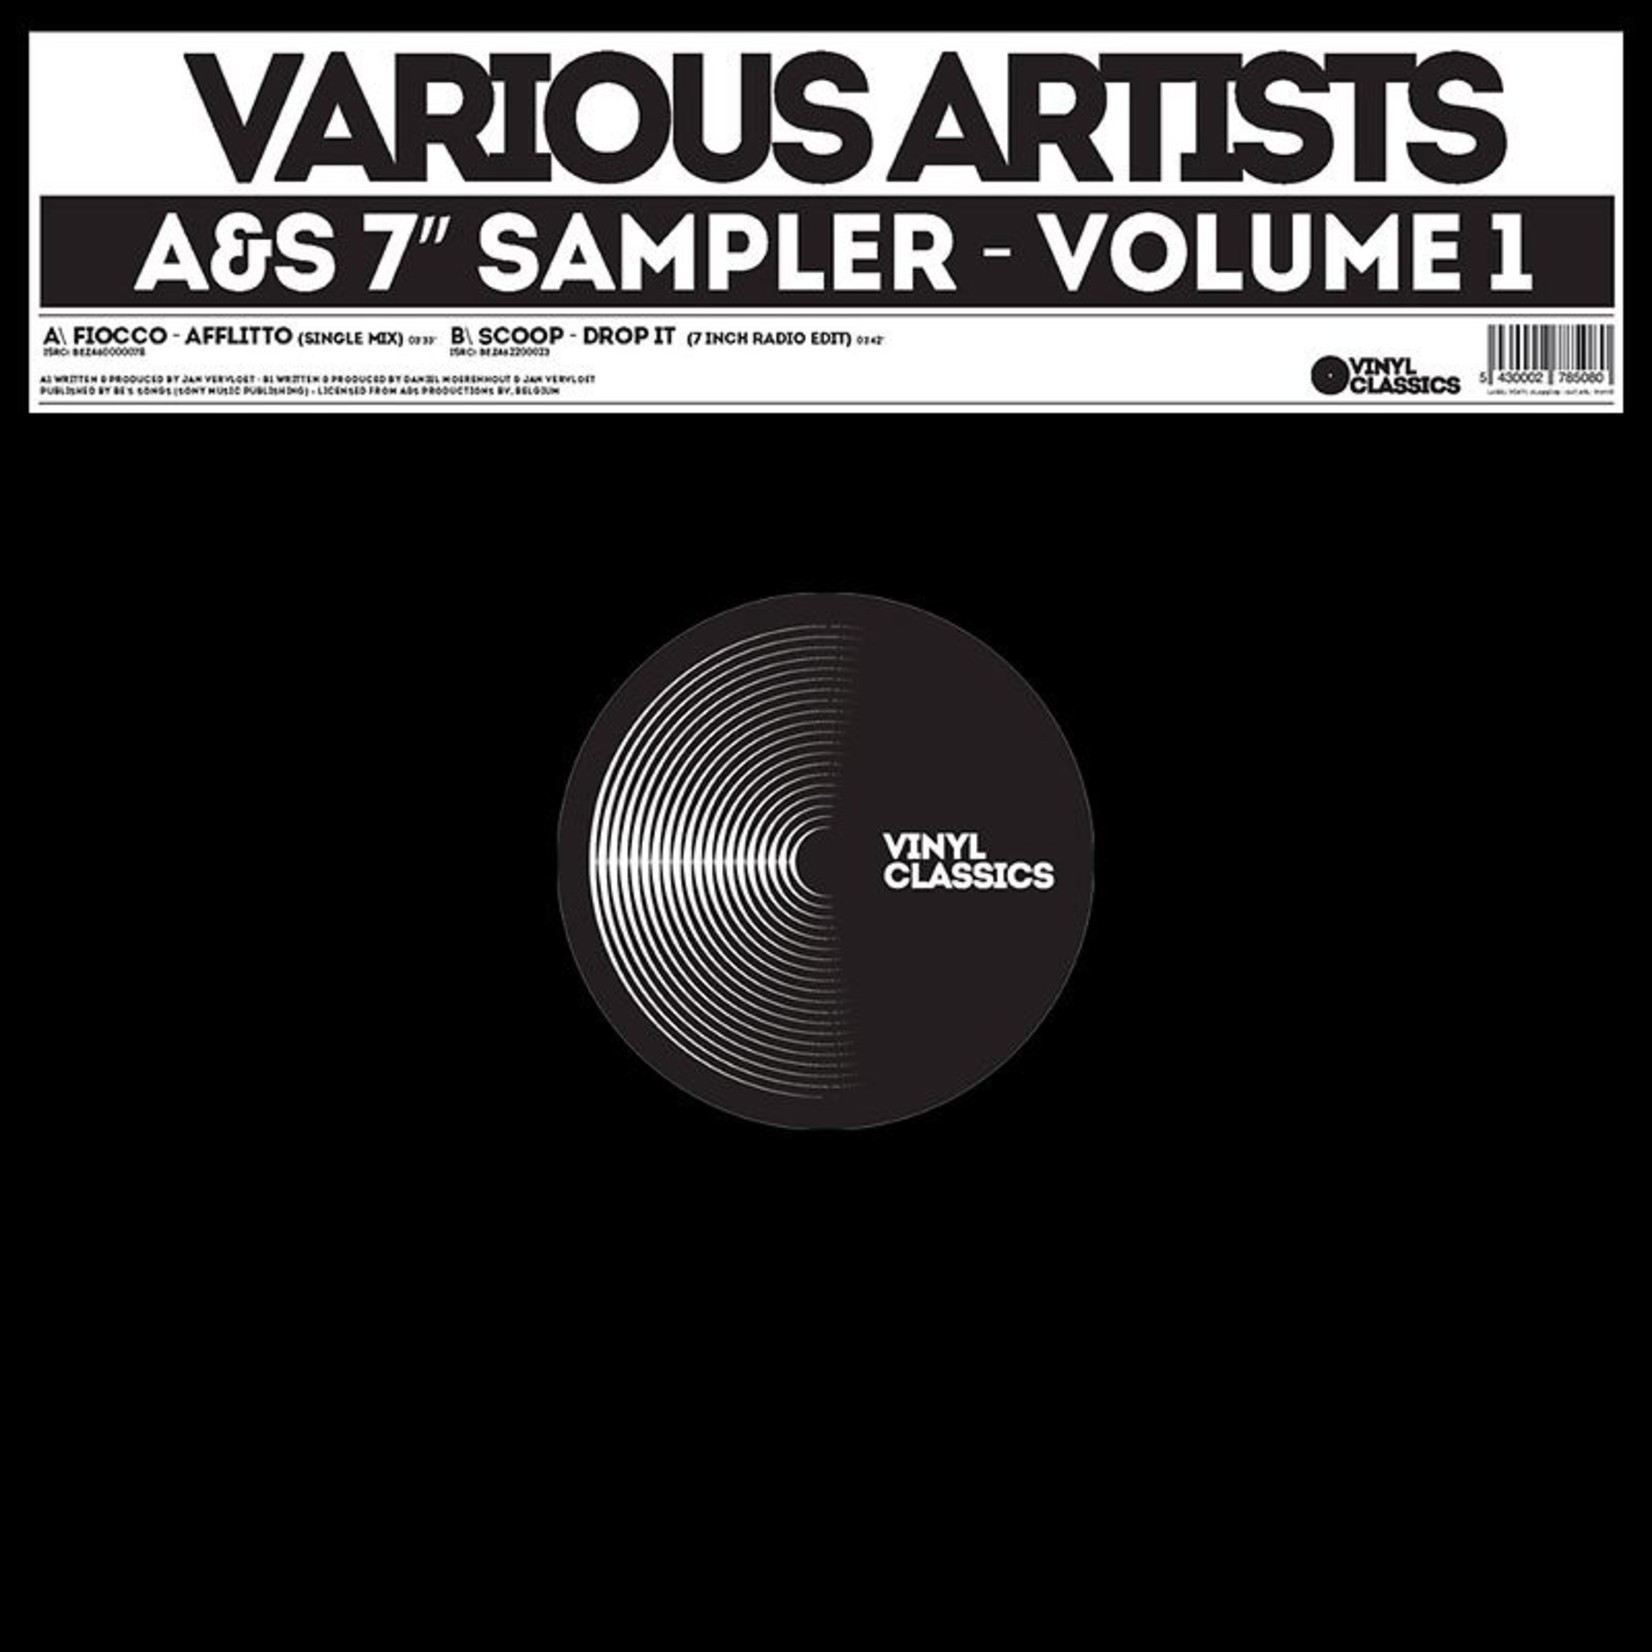 V/A – A&S 7" SAMPLER - VOLUME 1